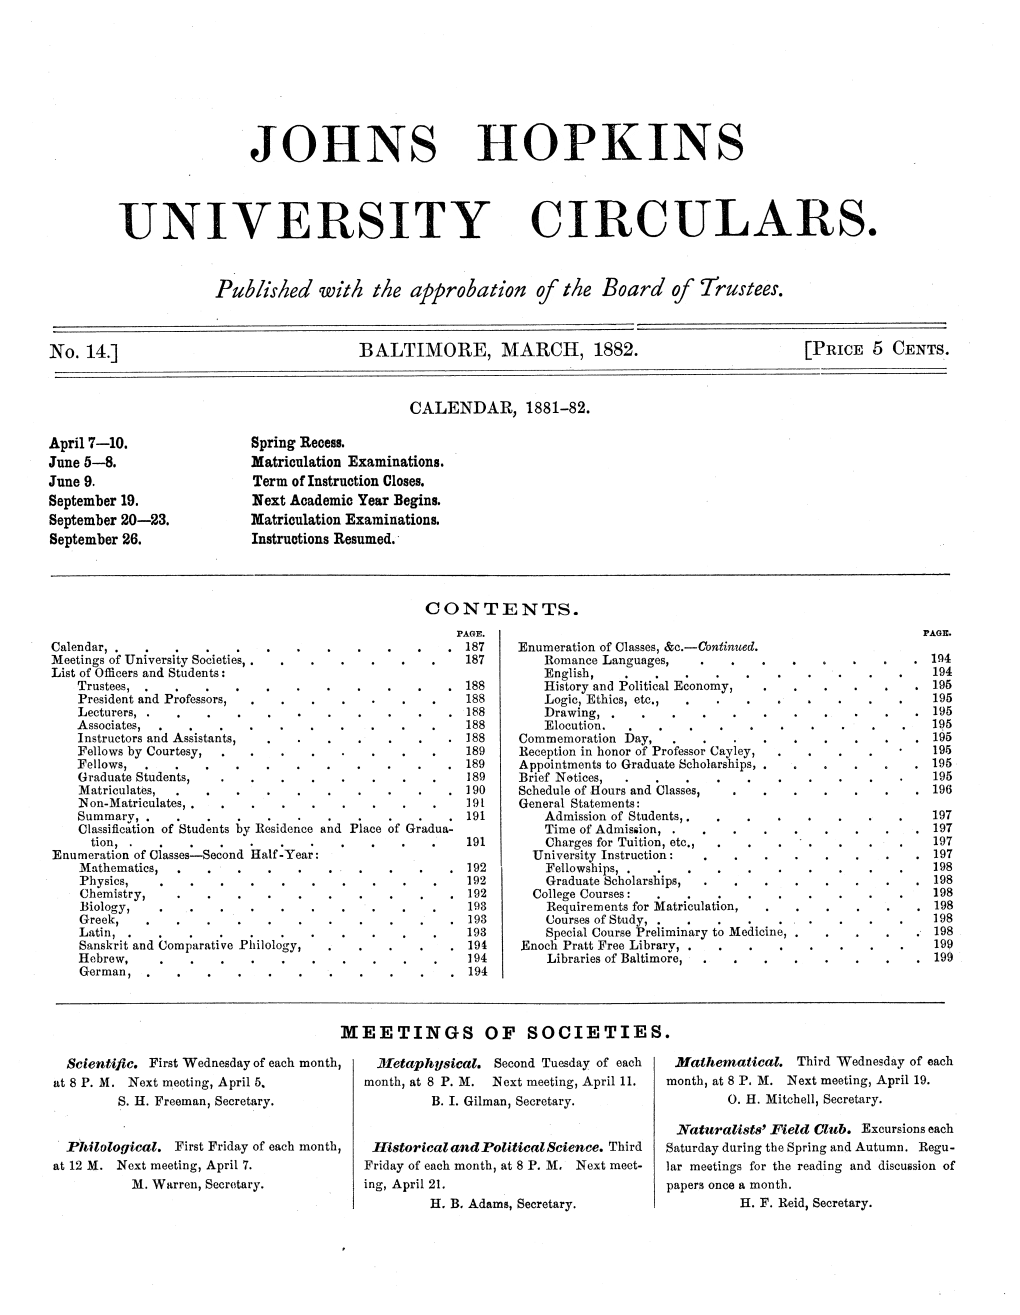 Johns Hopkins University Circulars